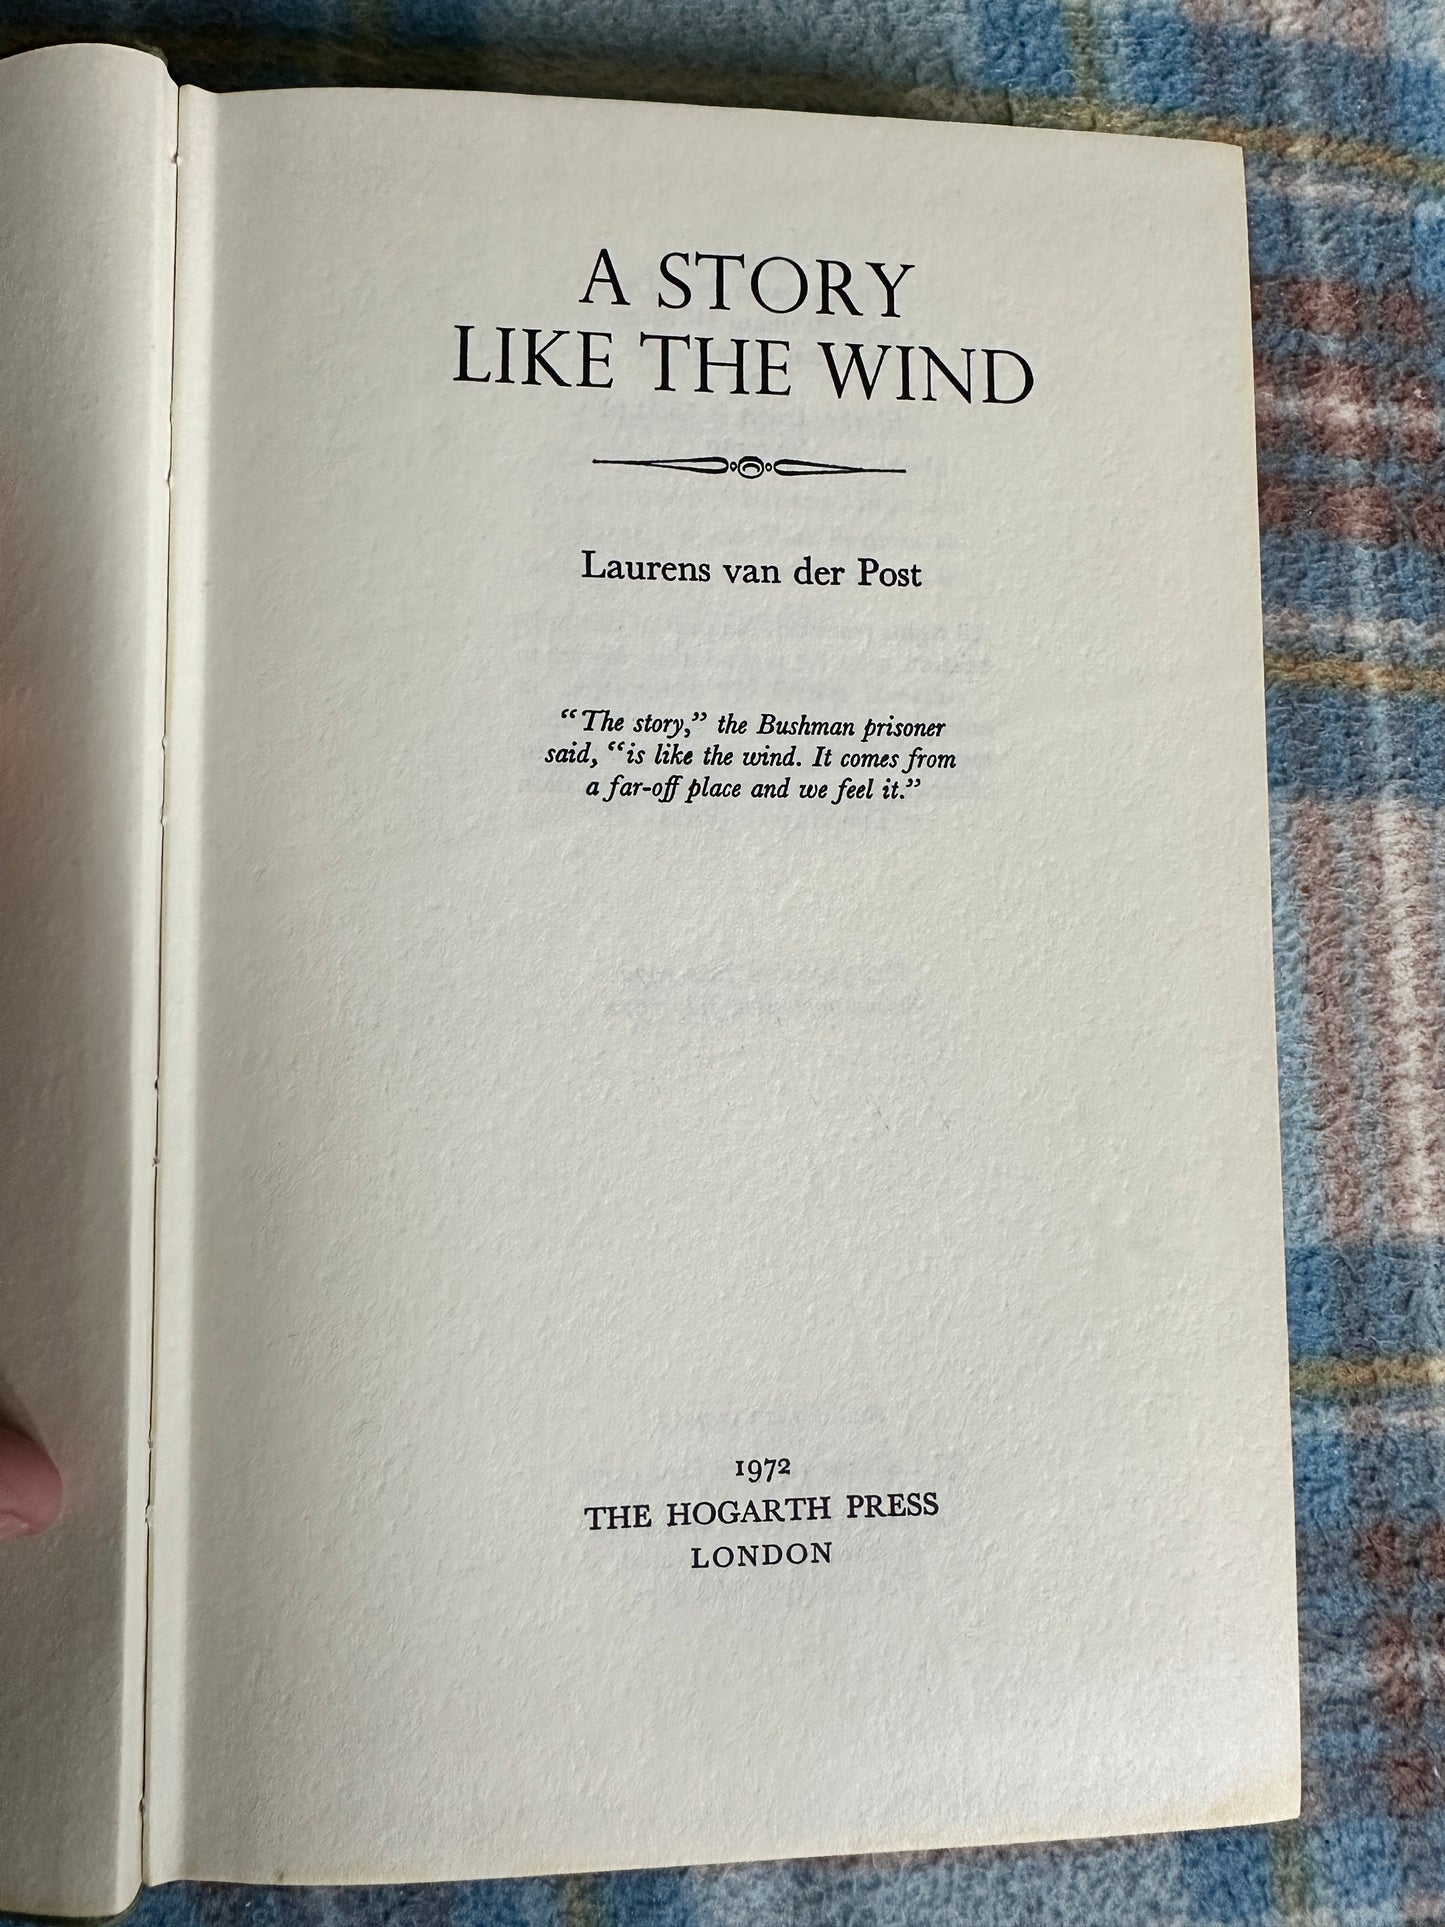 1972 A Story Like The Wind - Laurens Van der Post (The Hogarth Press)